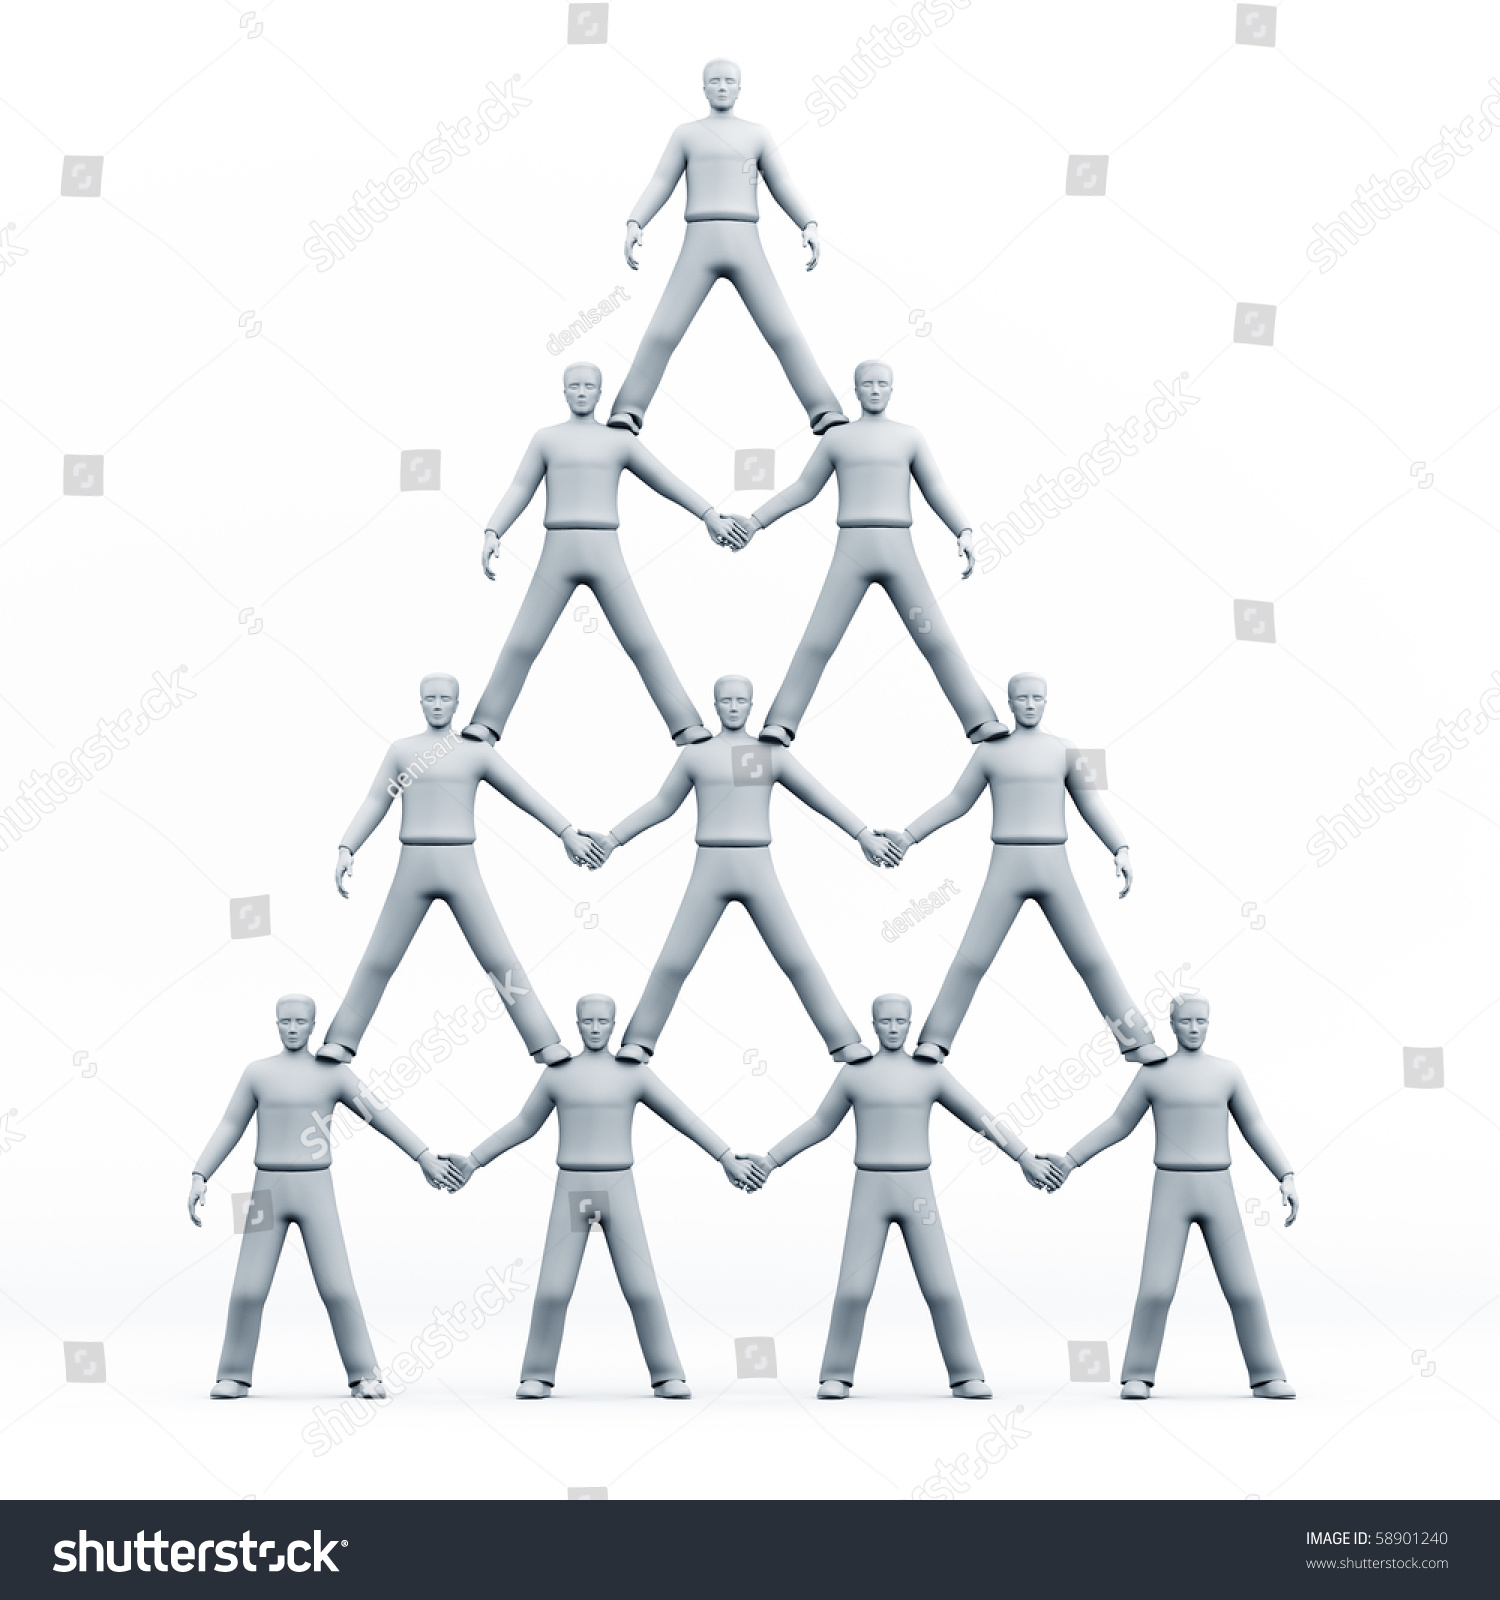 команда пирамида